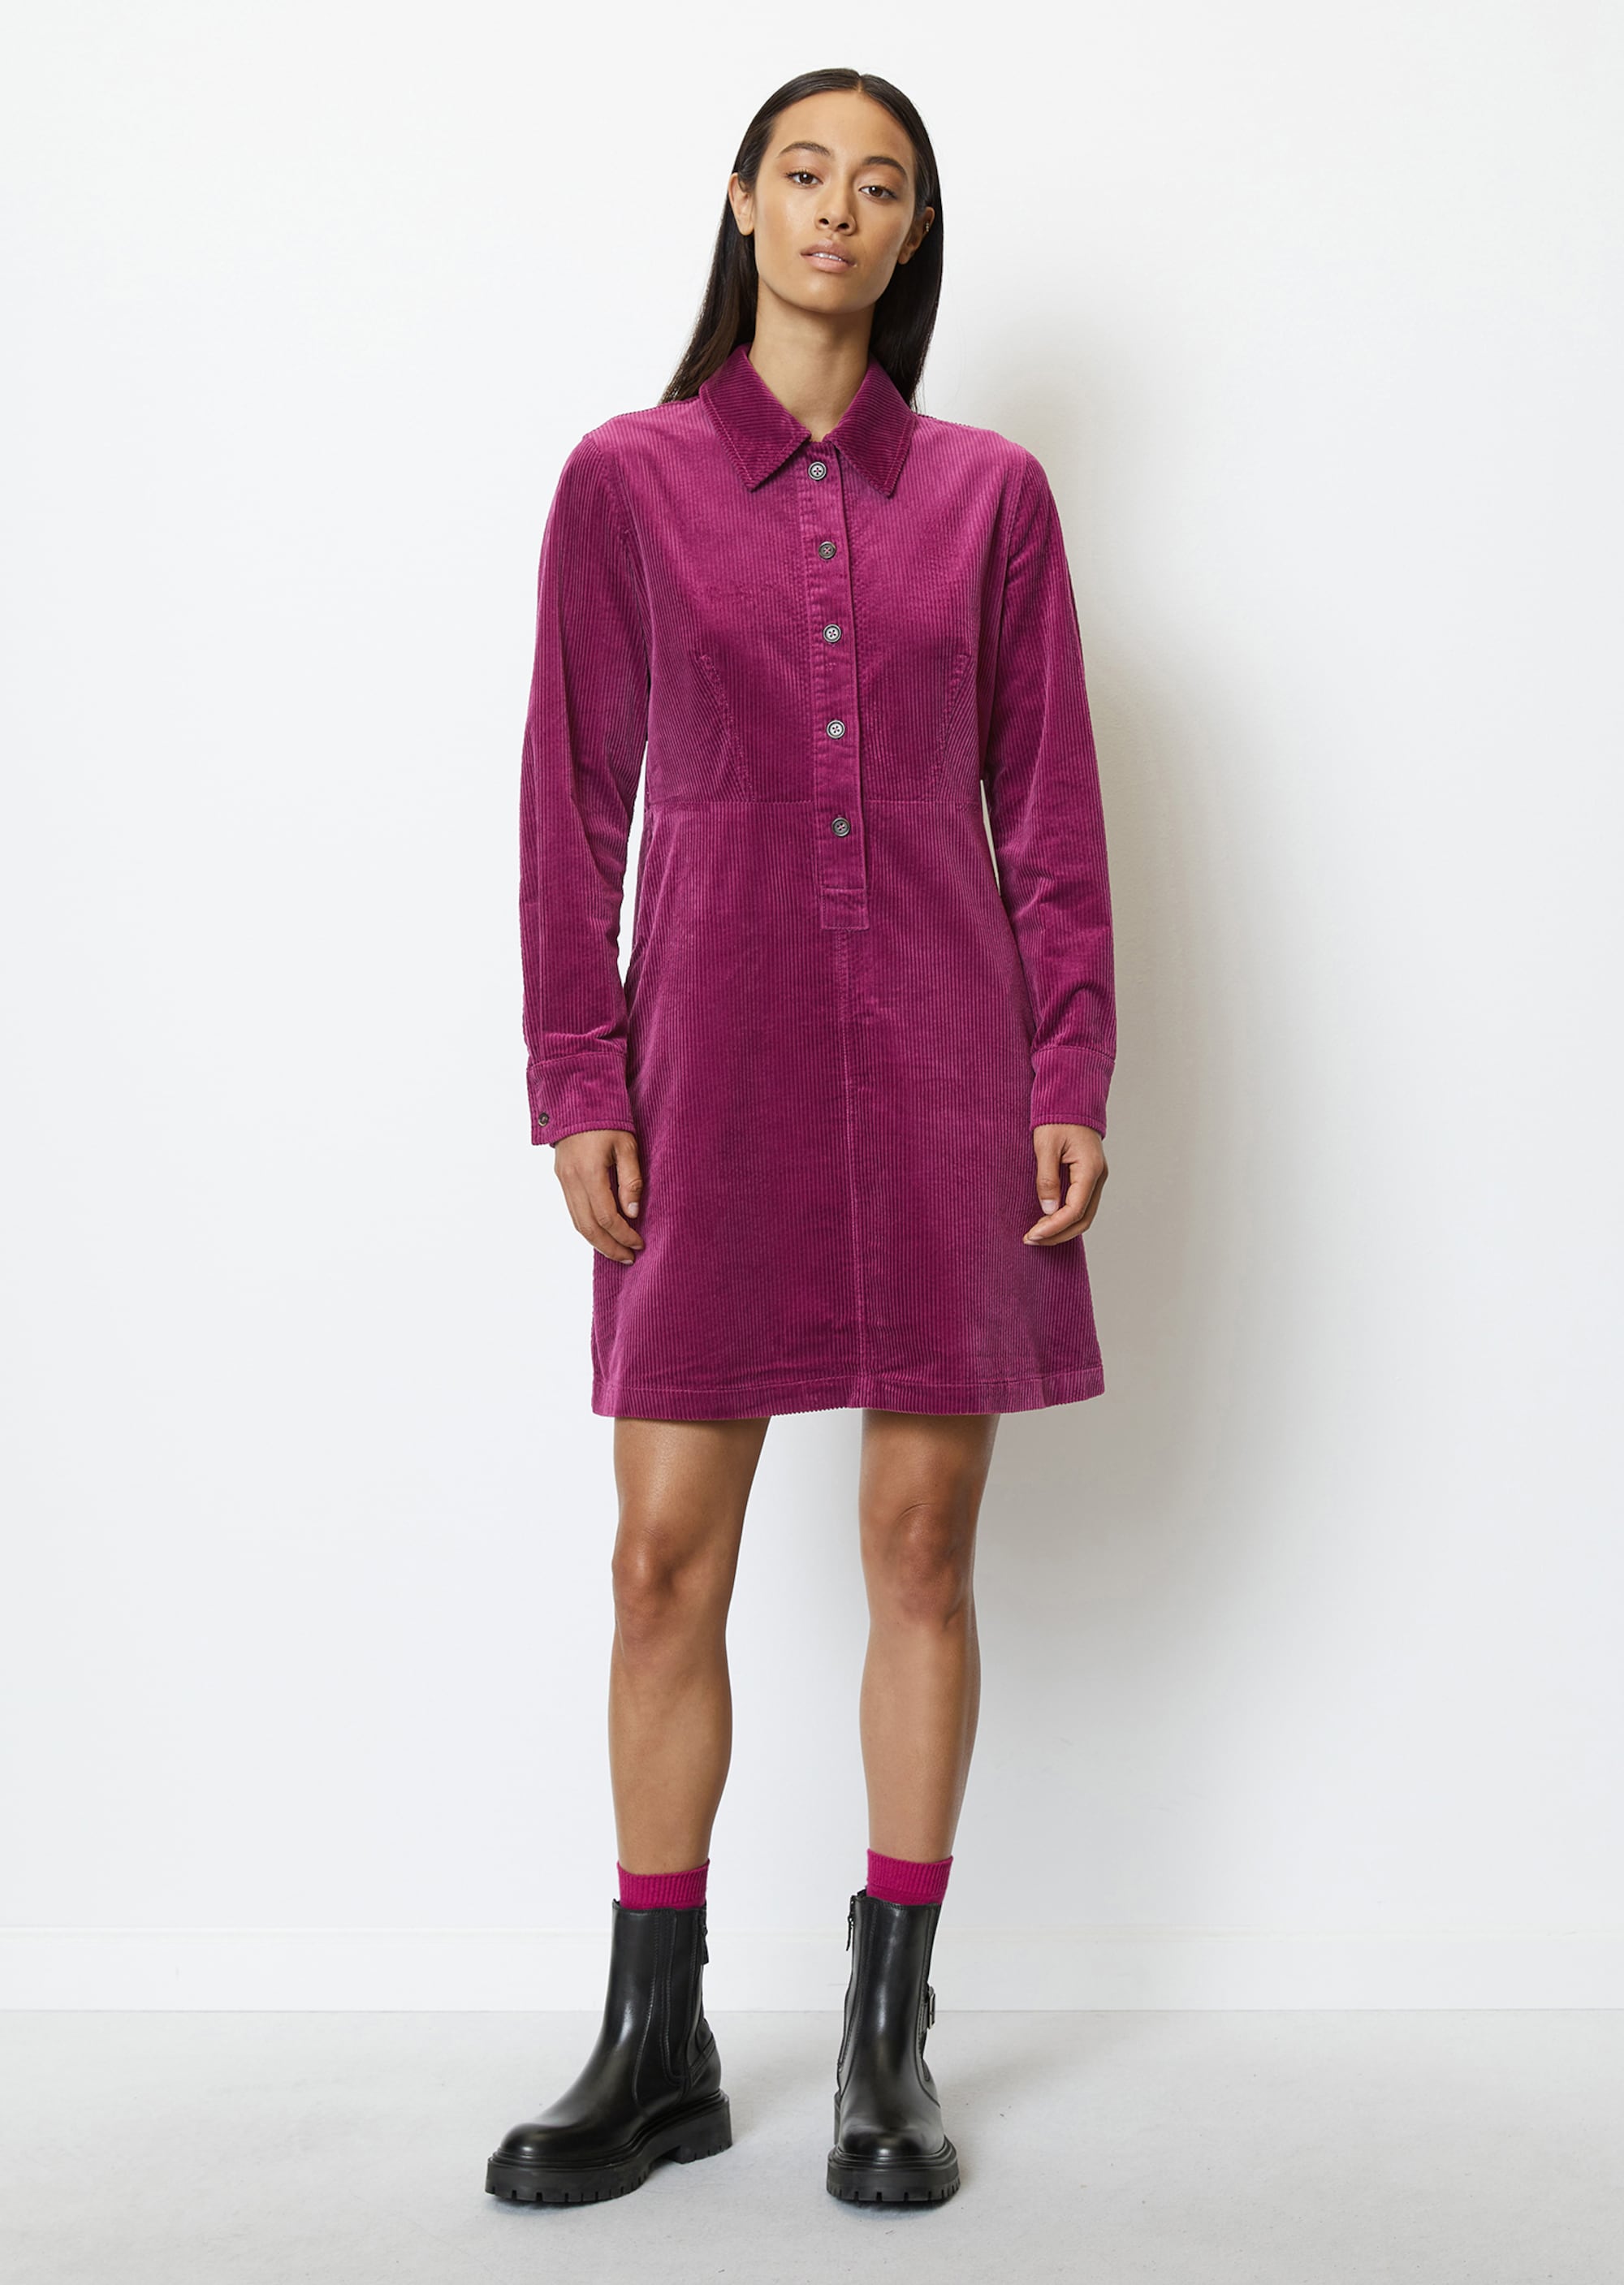 Kurzes Cordkleid fitted aus Organic Cotton - lila | Hemdblusenkleider |  MARC O'POLO